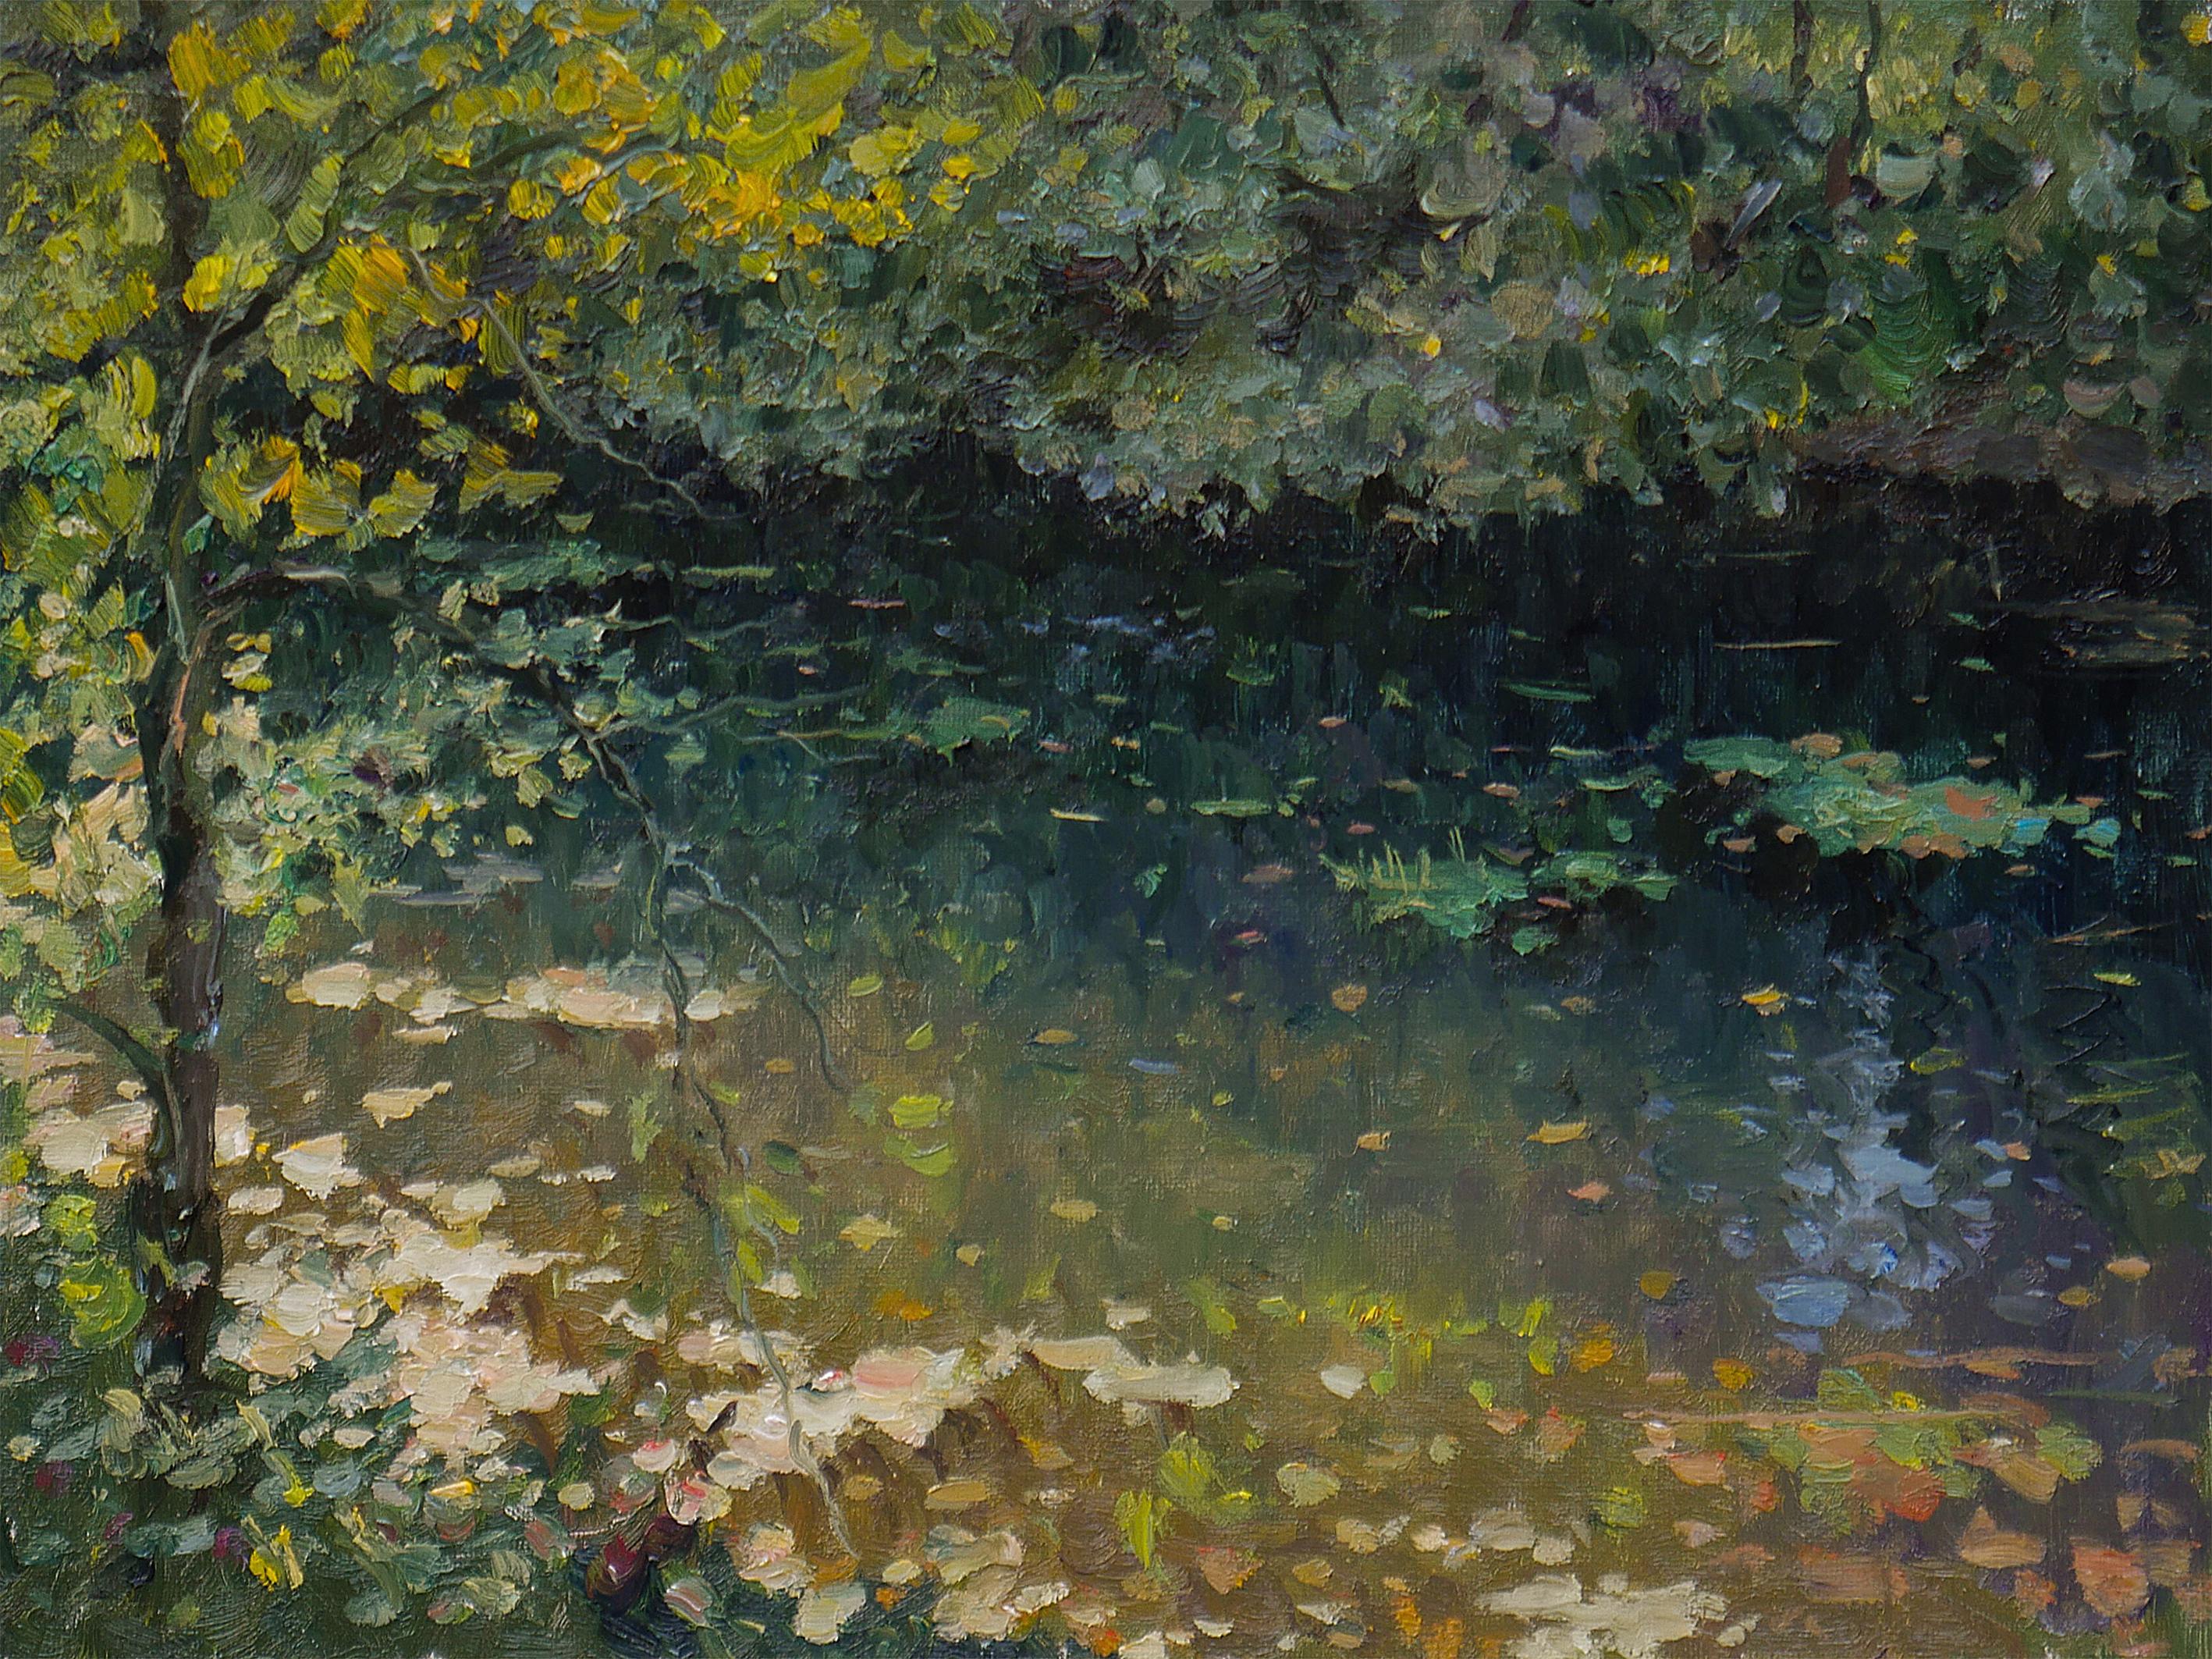 Interior Painting Nikolay Dmitriev - The Sunny Water - peinture de paysage fluvial